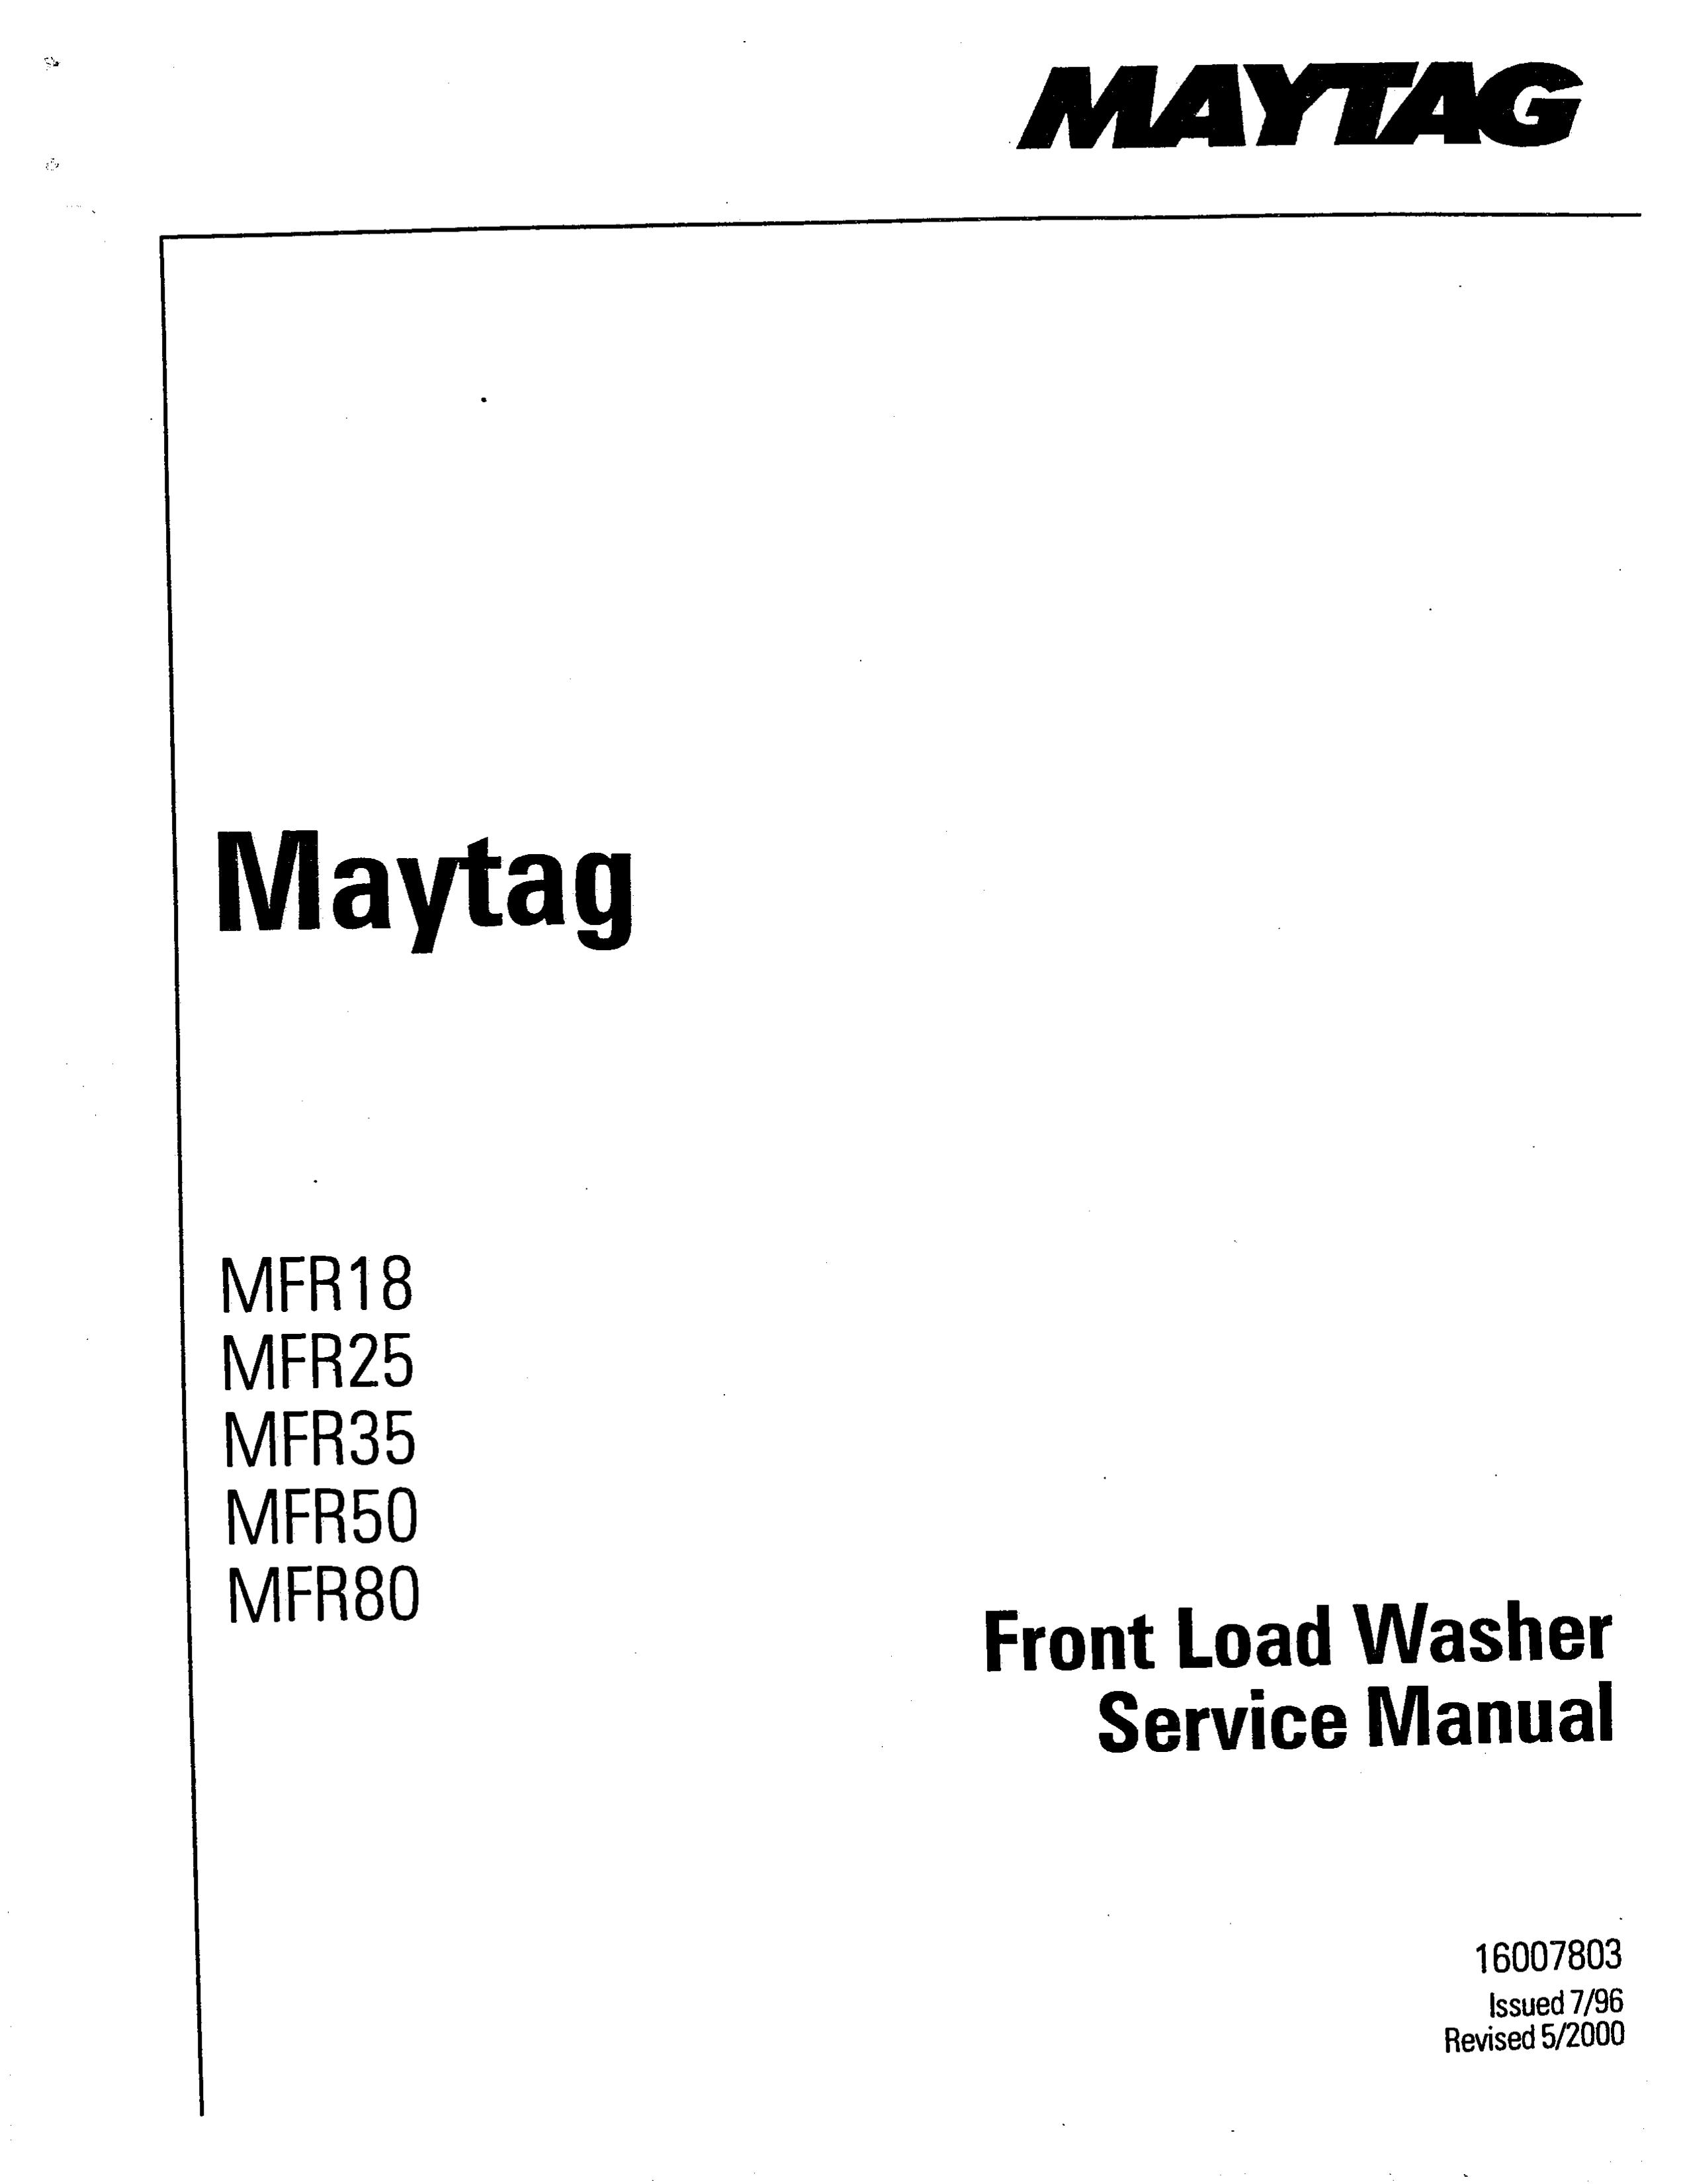 Maytag 217926 Washer User Manual